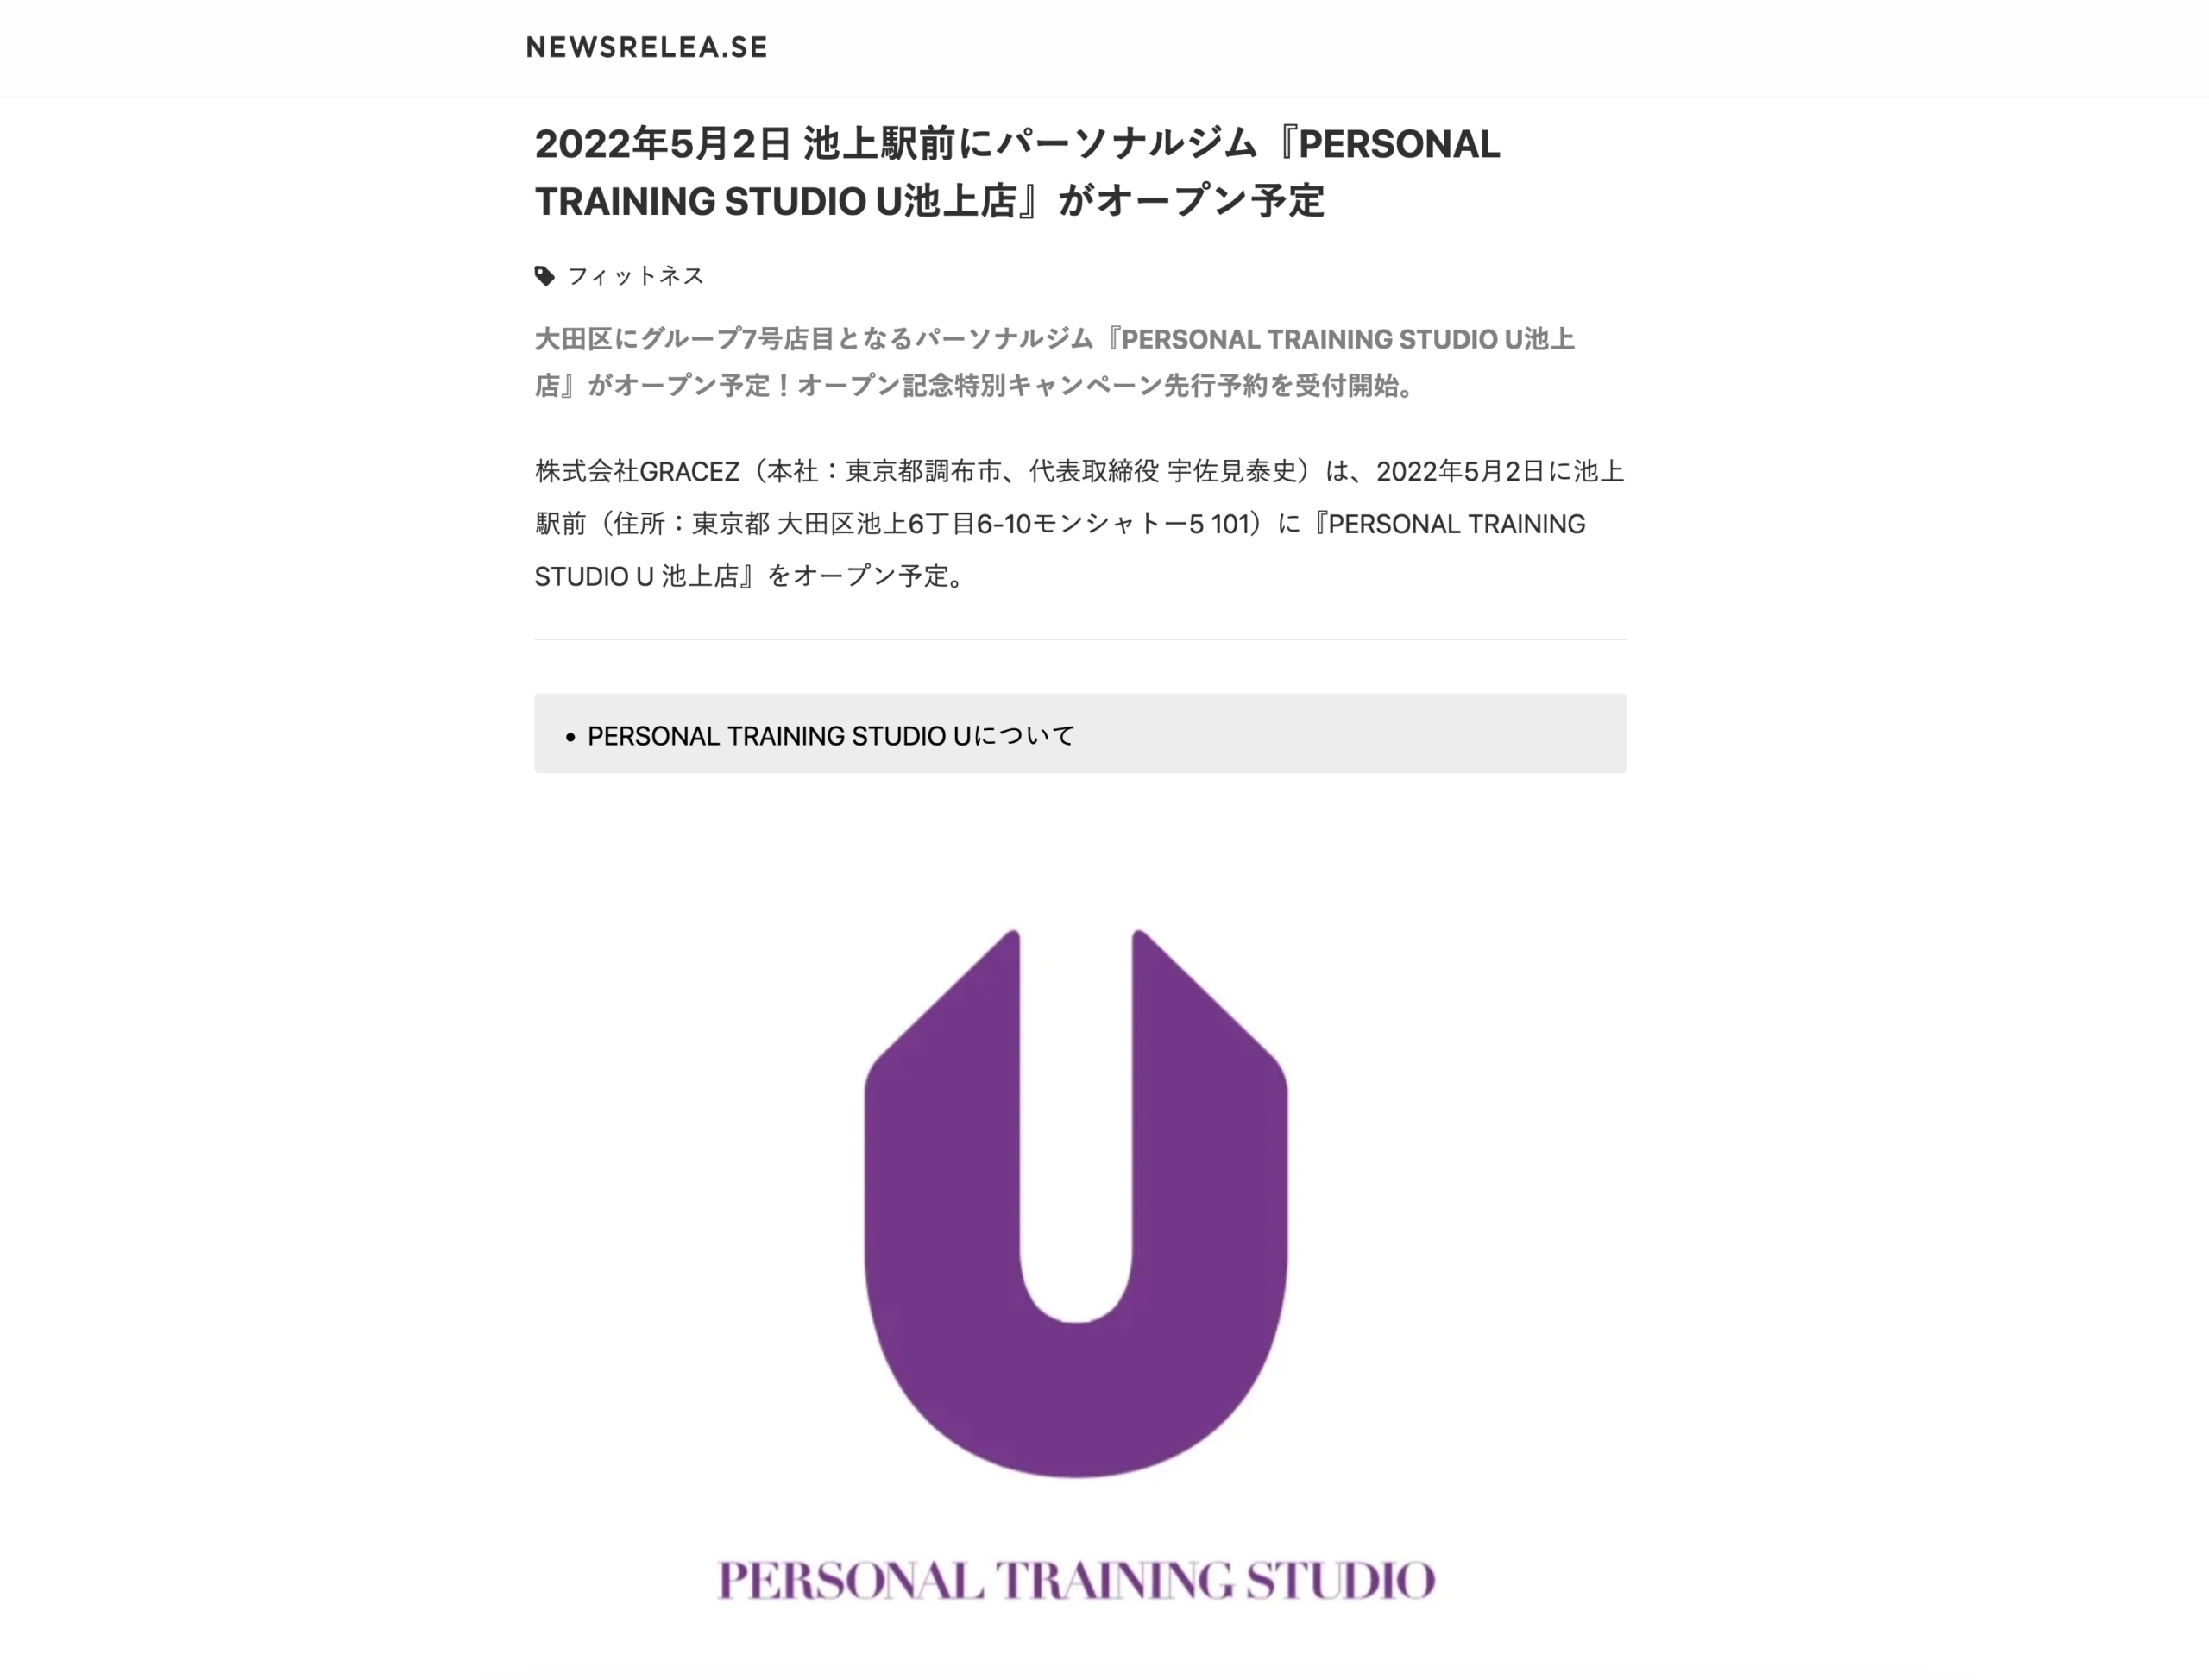 「NEWSRELEA.SE」にてPERSONAL TRAINING STUDIO U池上店のプレスリリース配信